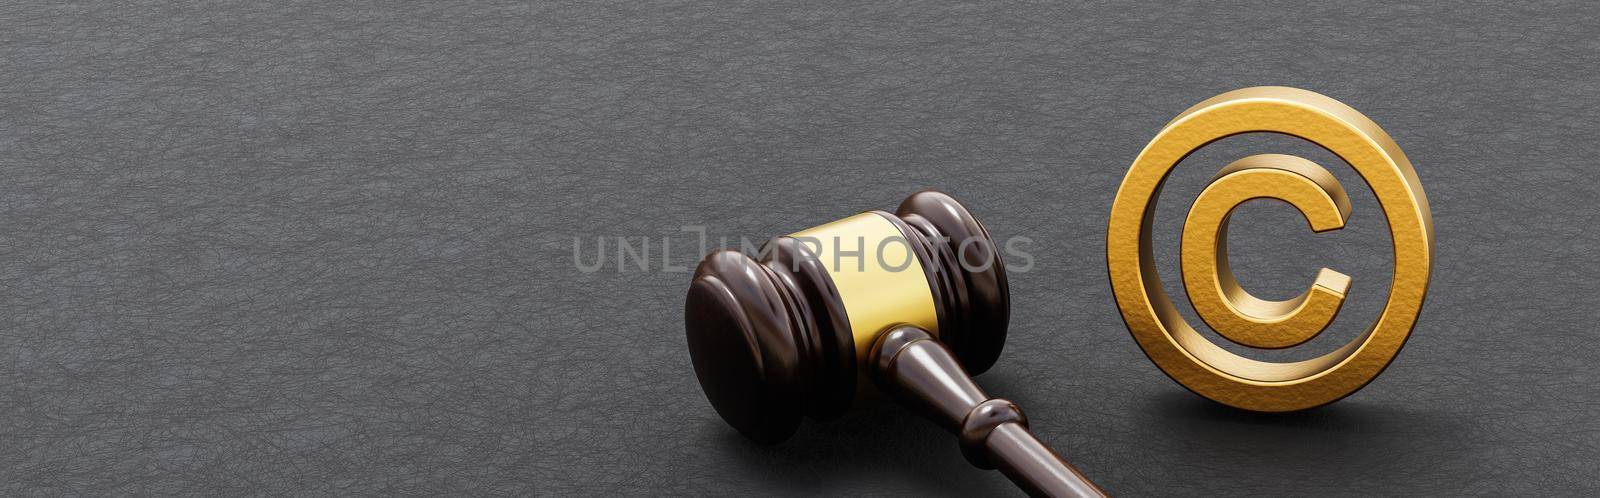 Judge's Gavel on Dark Background with Golden Copyright Symbol Shape with Copy Space 3D Render Illustration